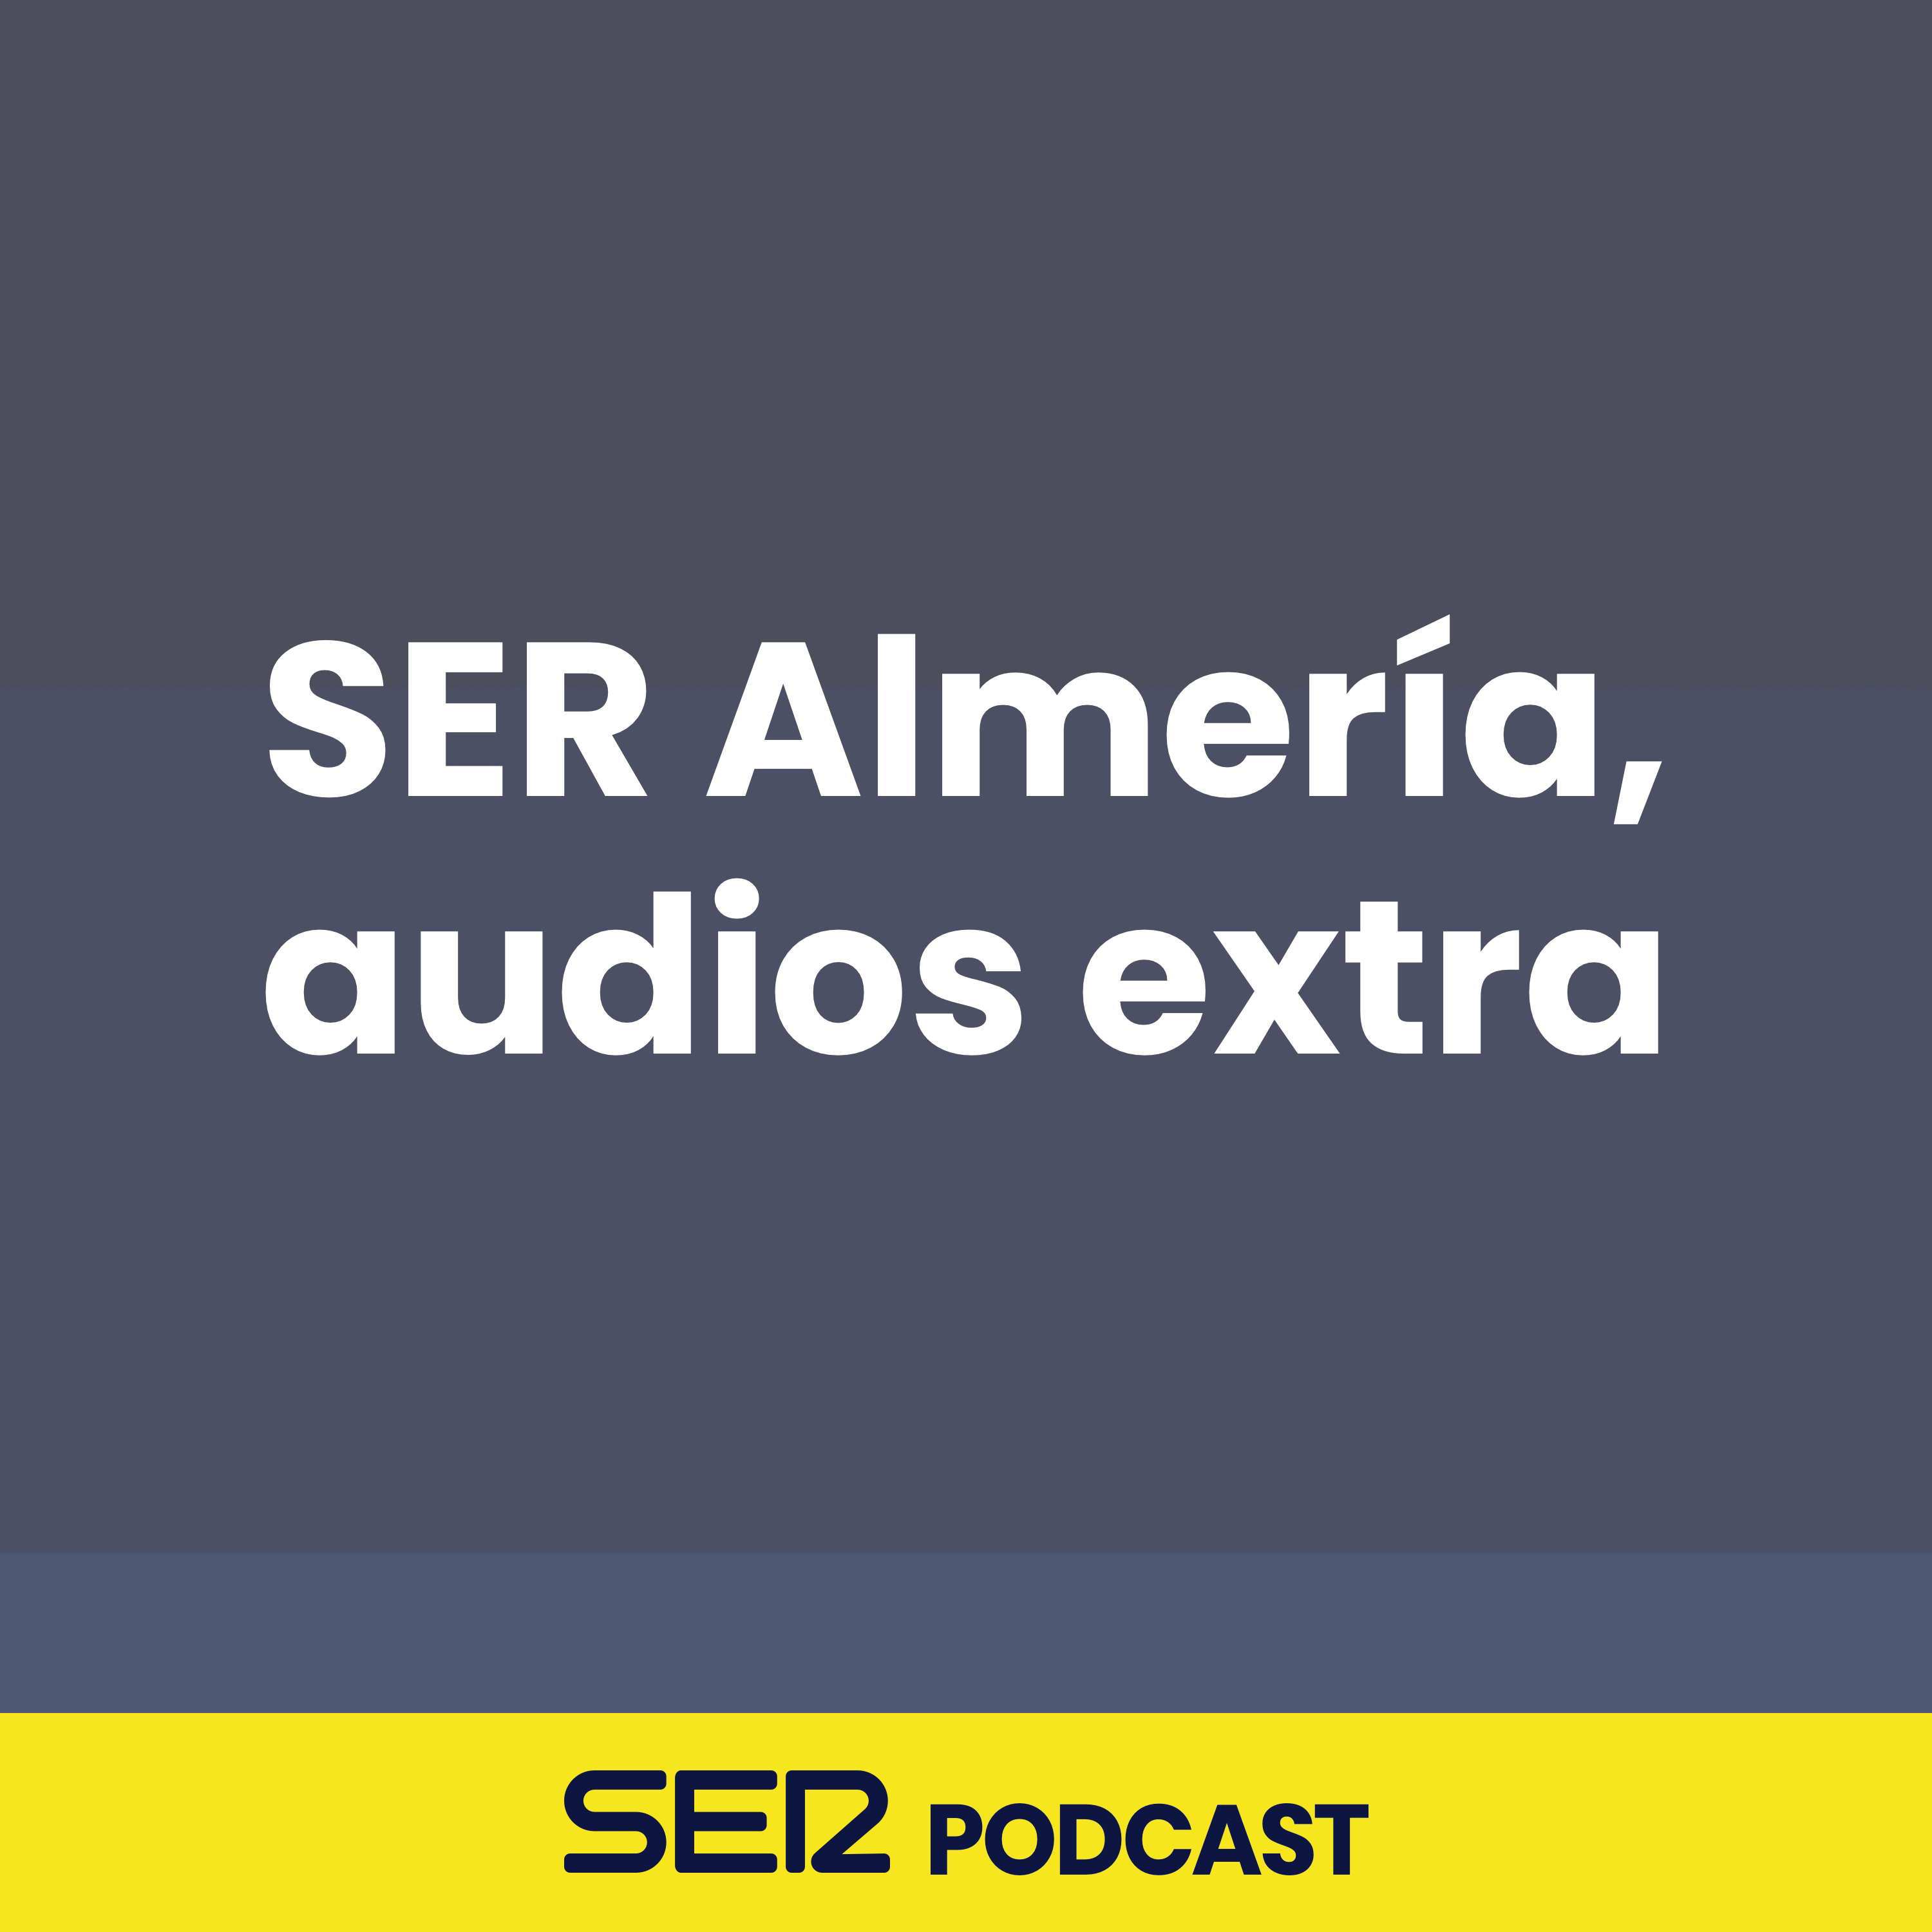 SER Almería, audios extra